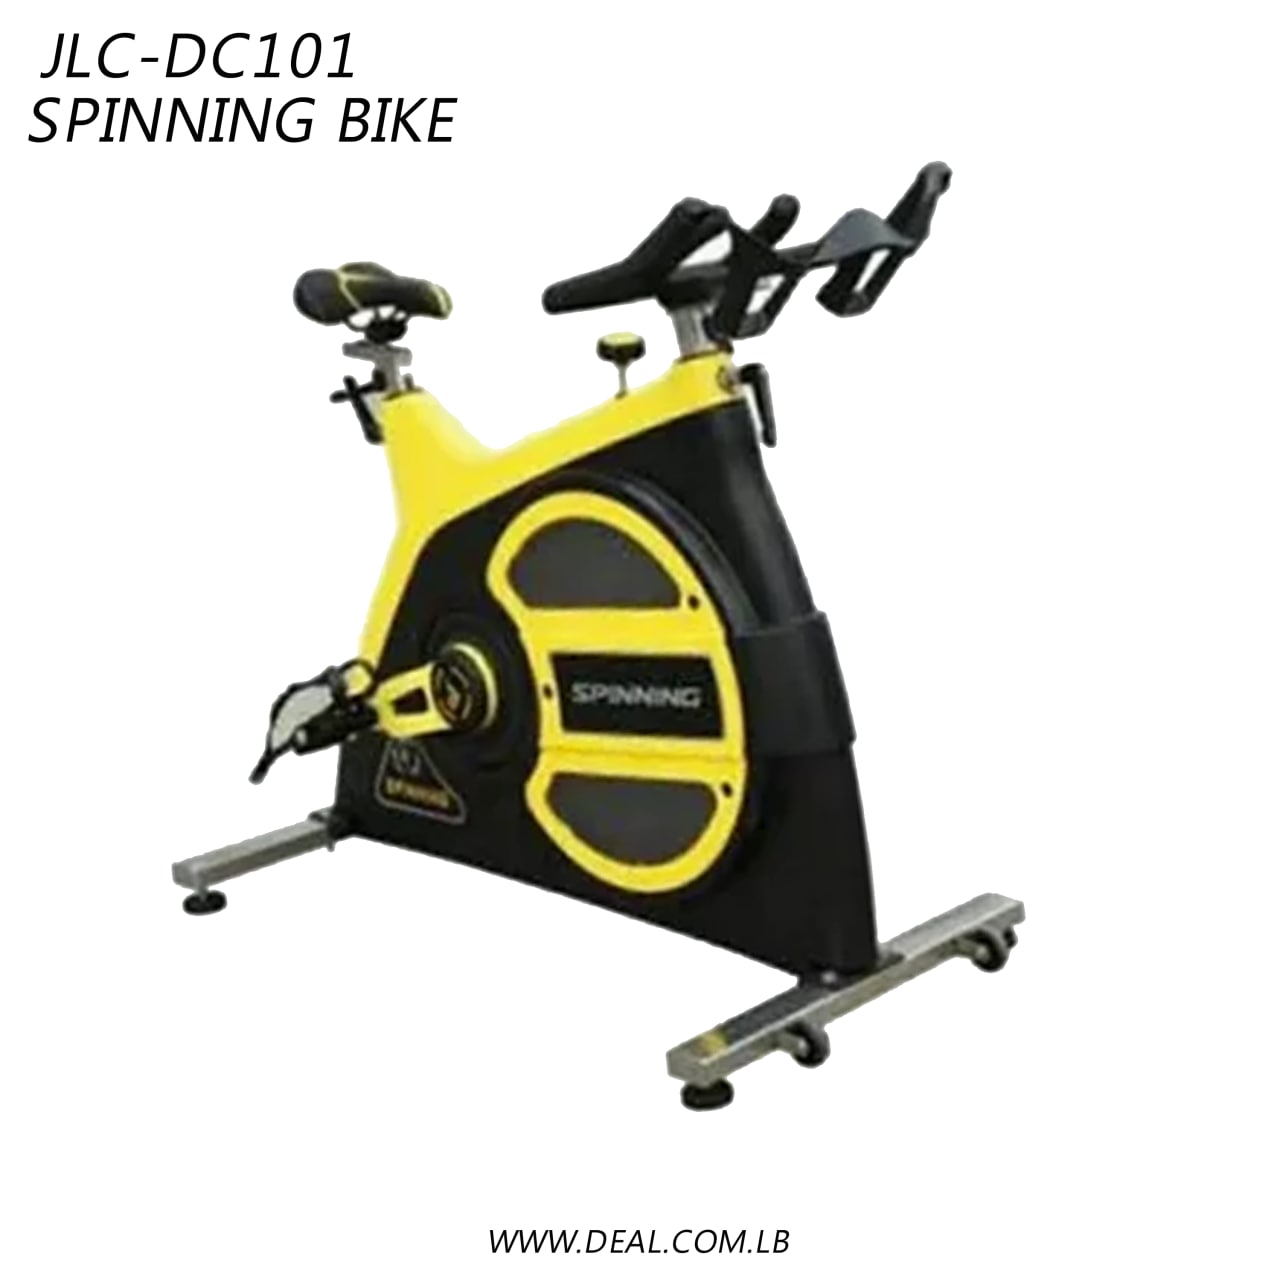 JLC-DC101+%7C+Spinning+bike